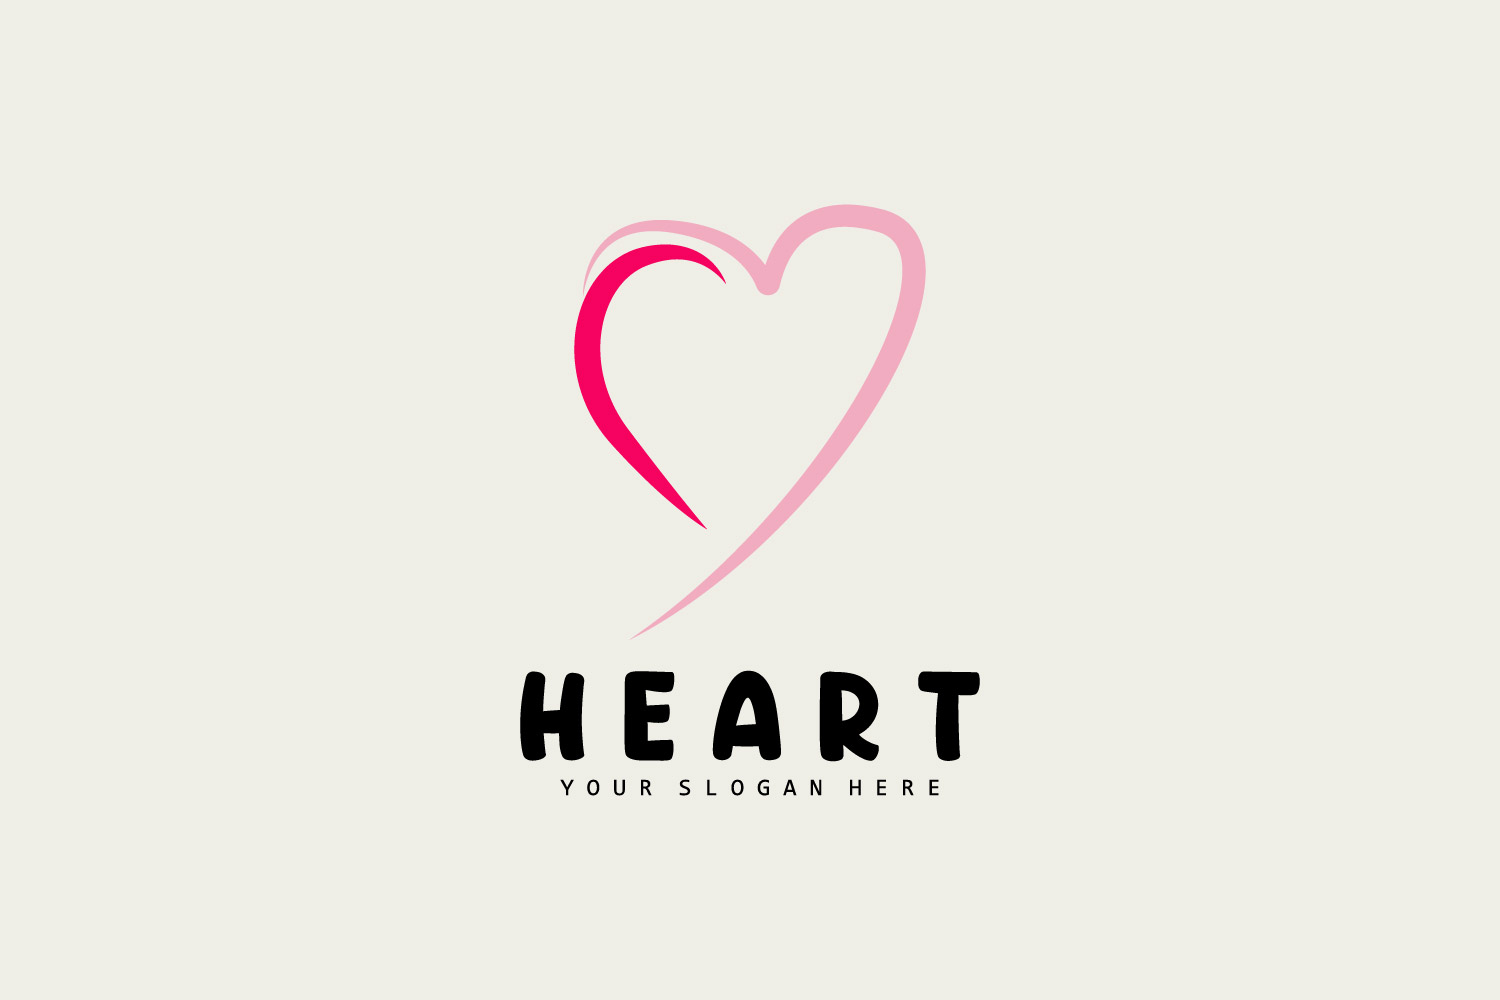 Heart Logo Love Design Valentine's DayV9